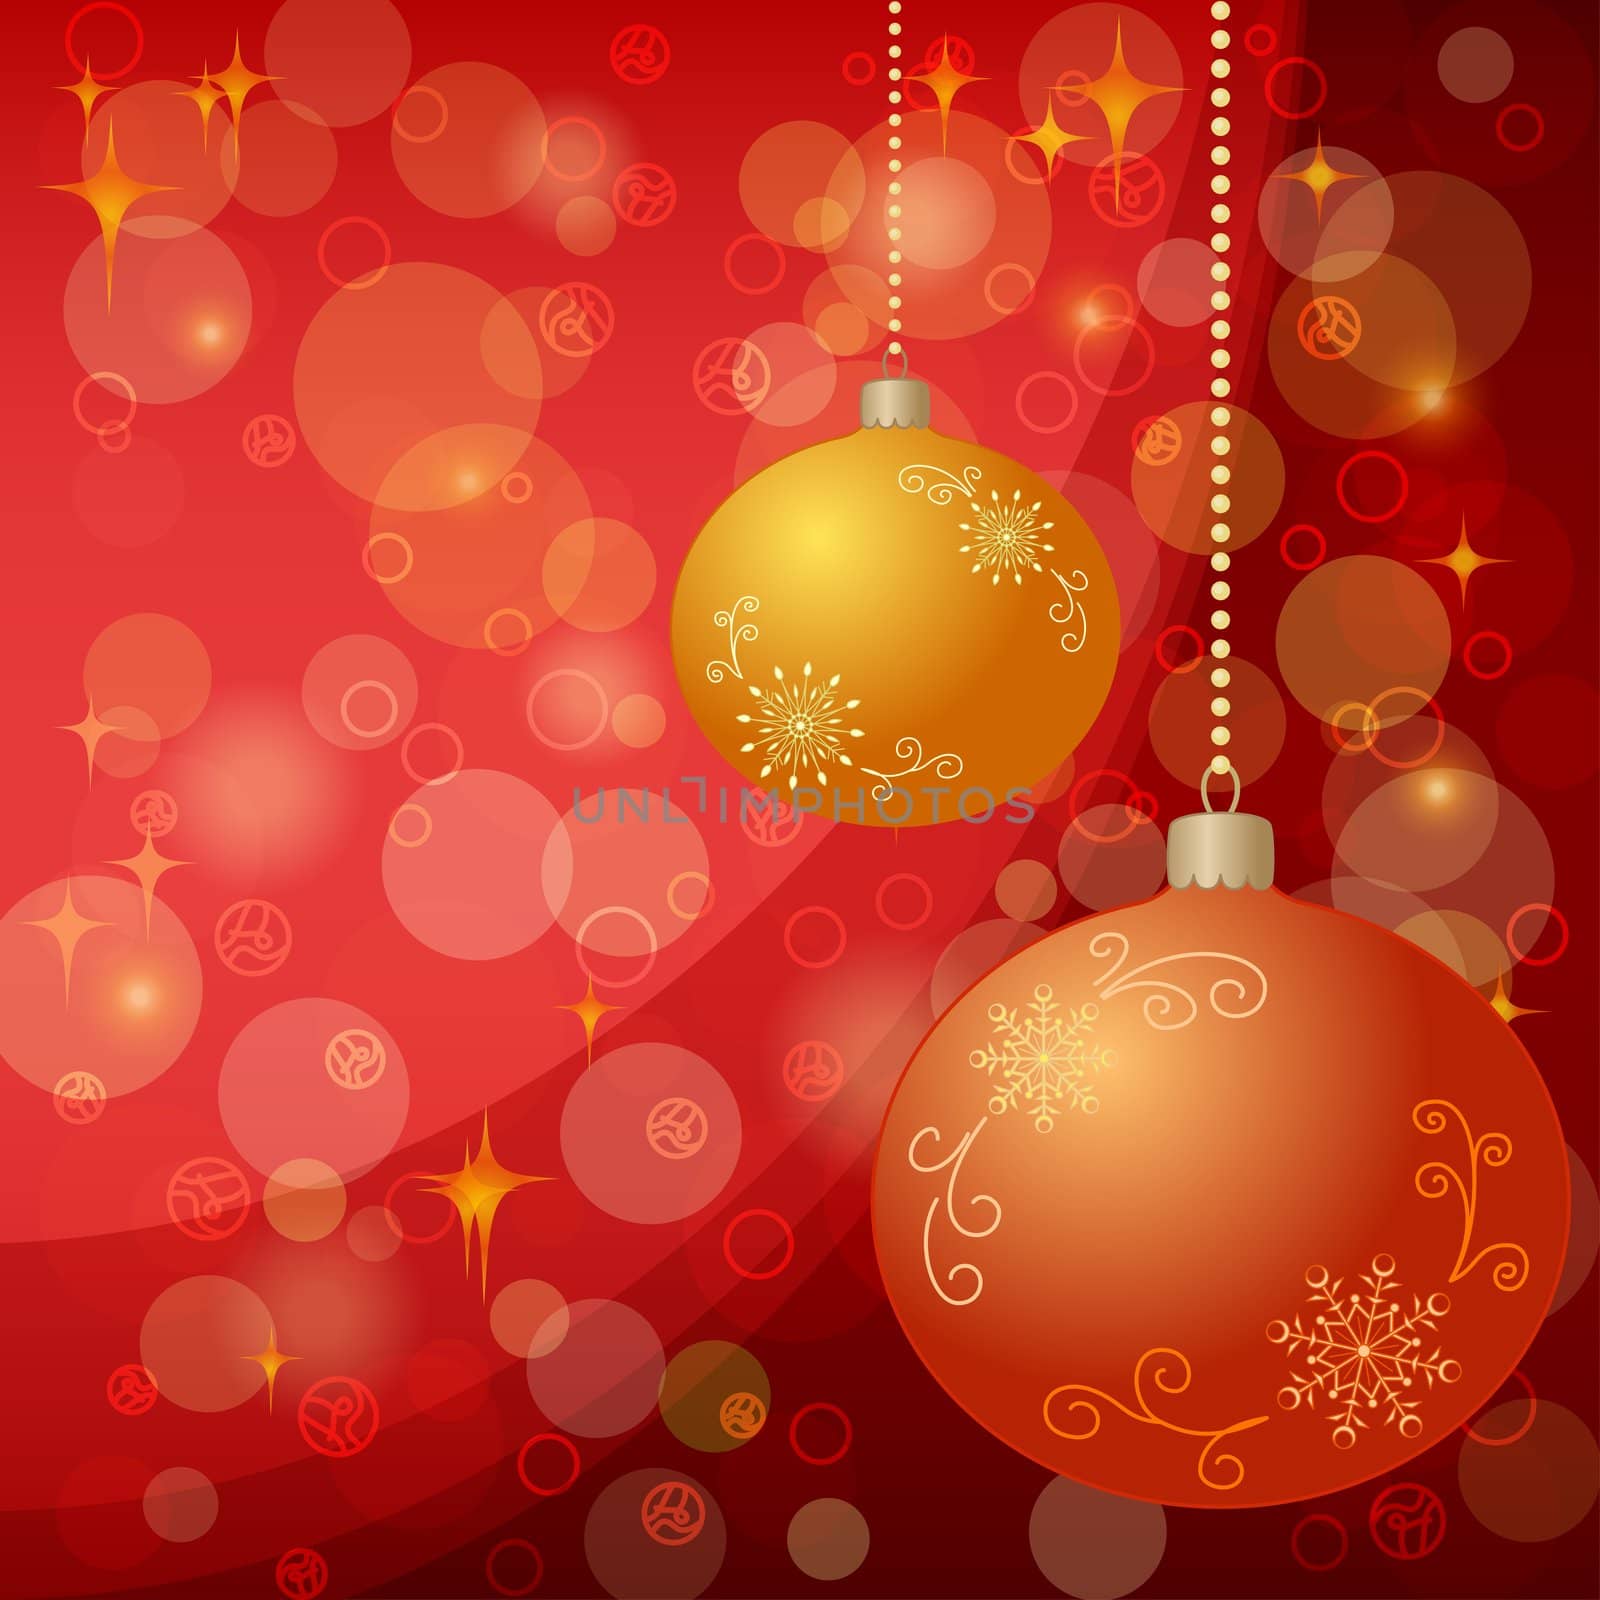 Christmas holiday background: balls, stars and circles